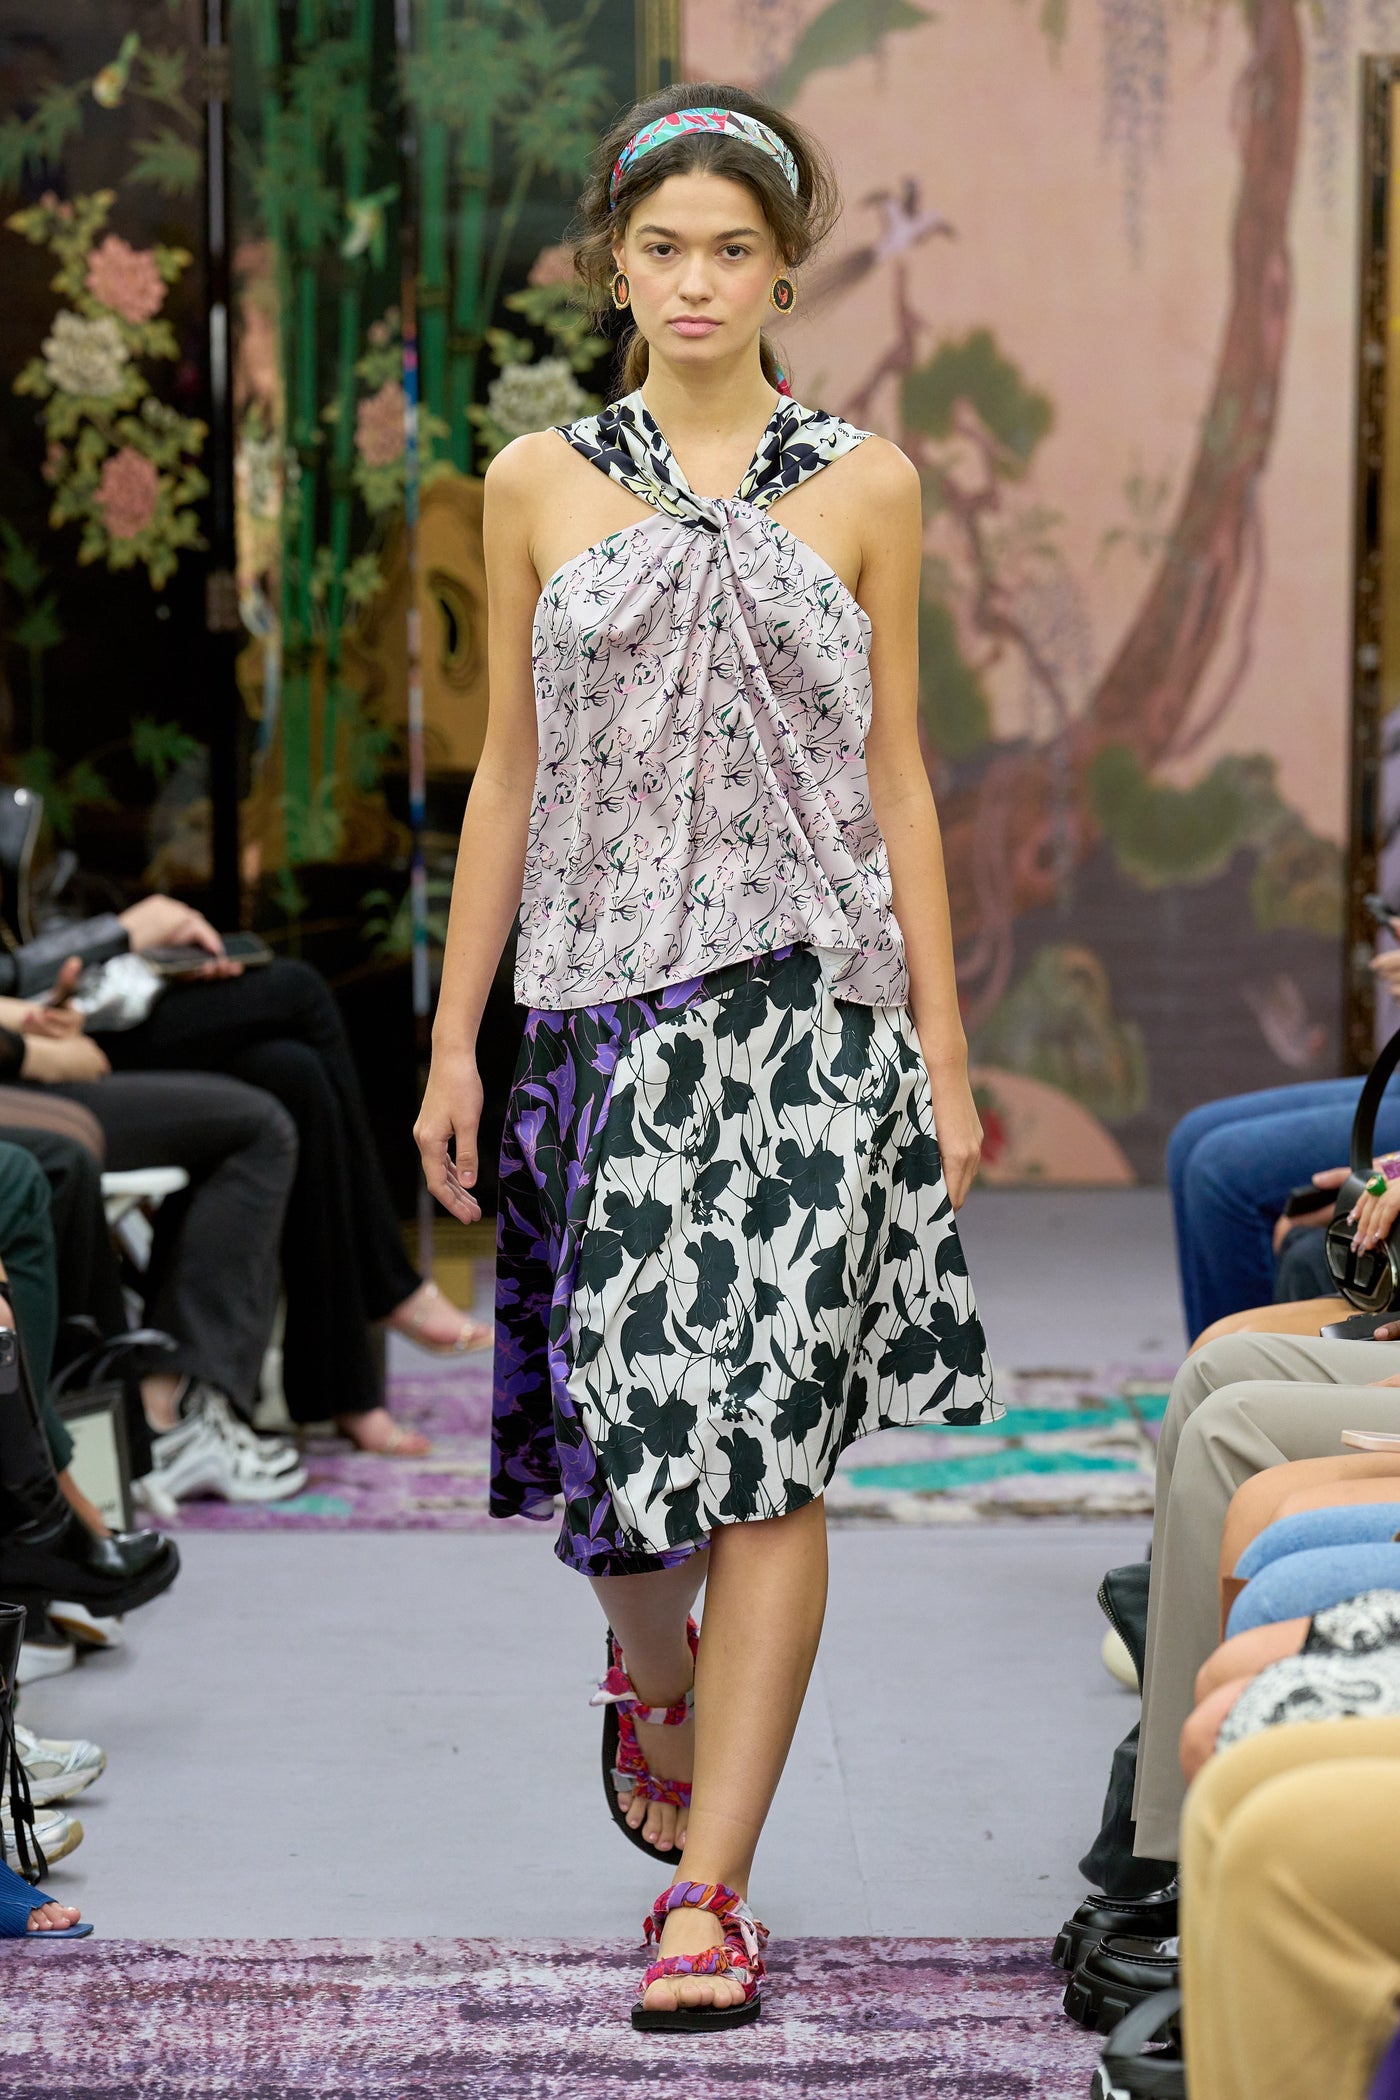 Floral Printed Purple Asymmetric Midi Skirt